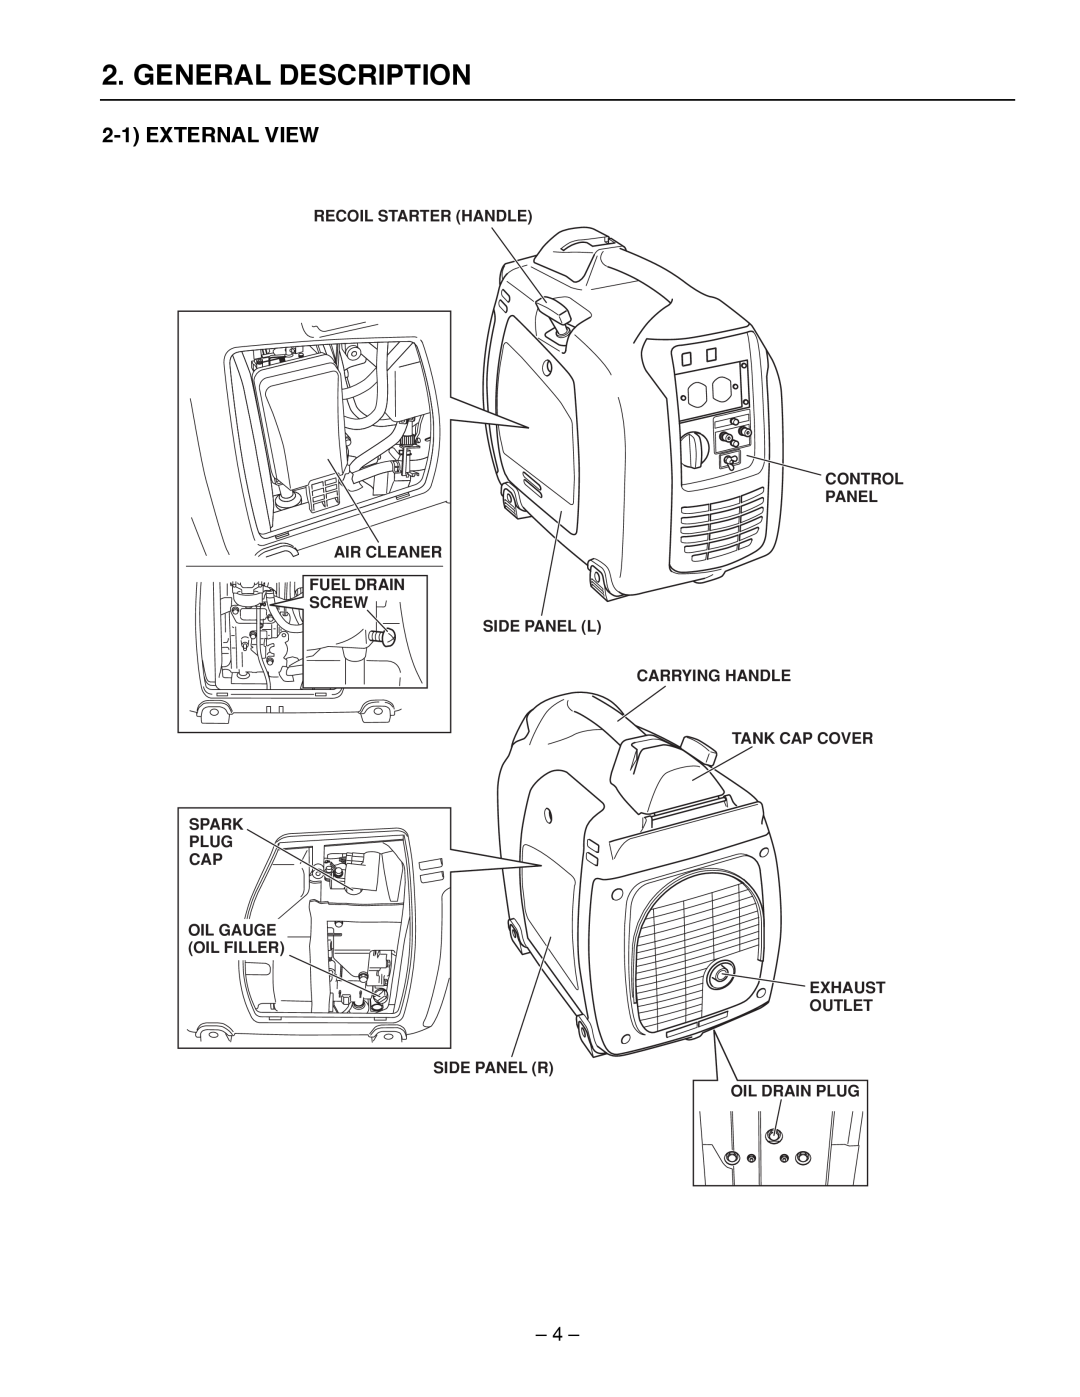 Subaru R1100 General Description, External View, Recoil Starter Handle Control Panel Air Cleaner Fuel Drain Screw 